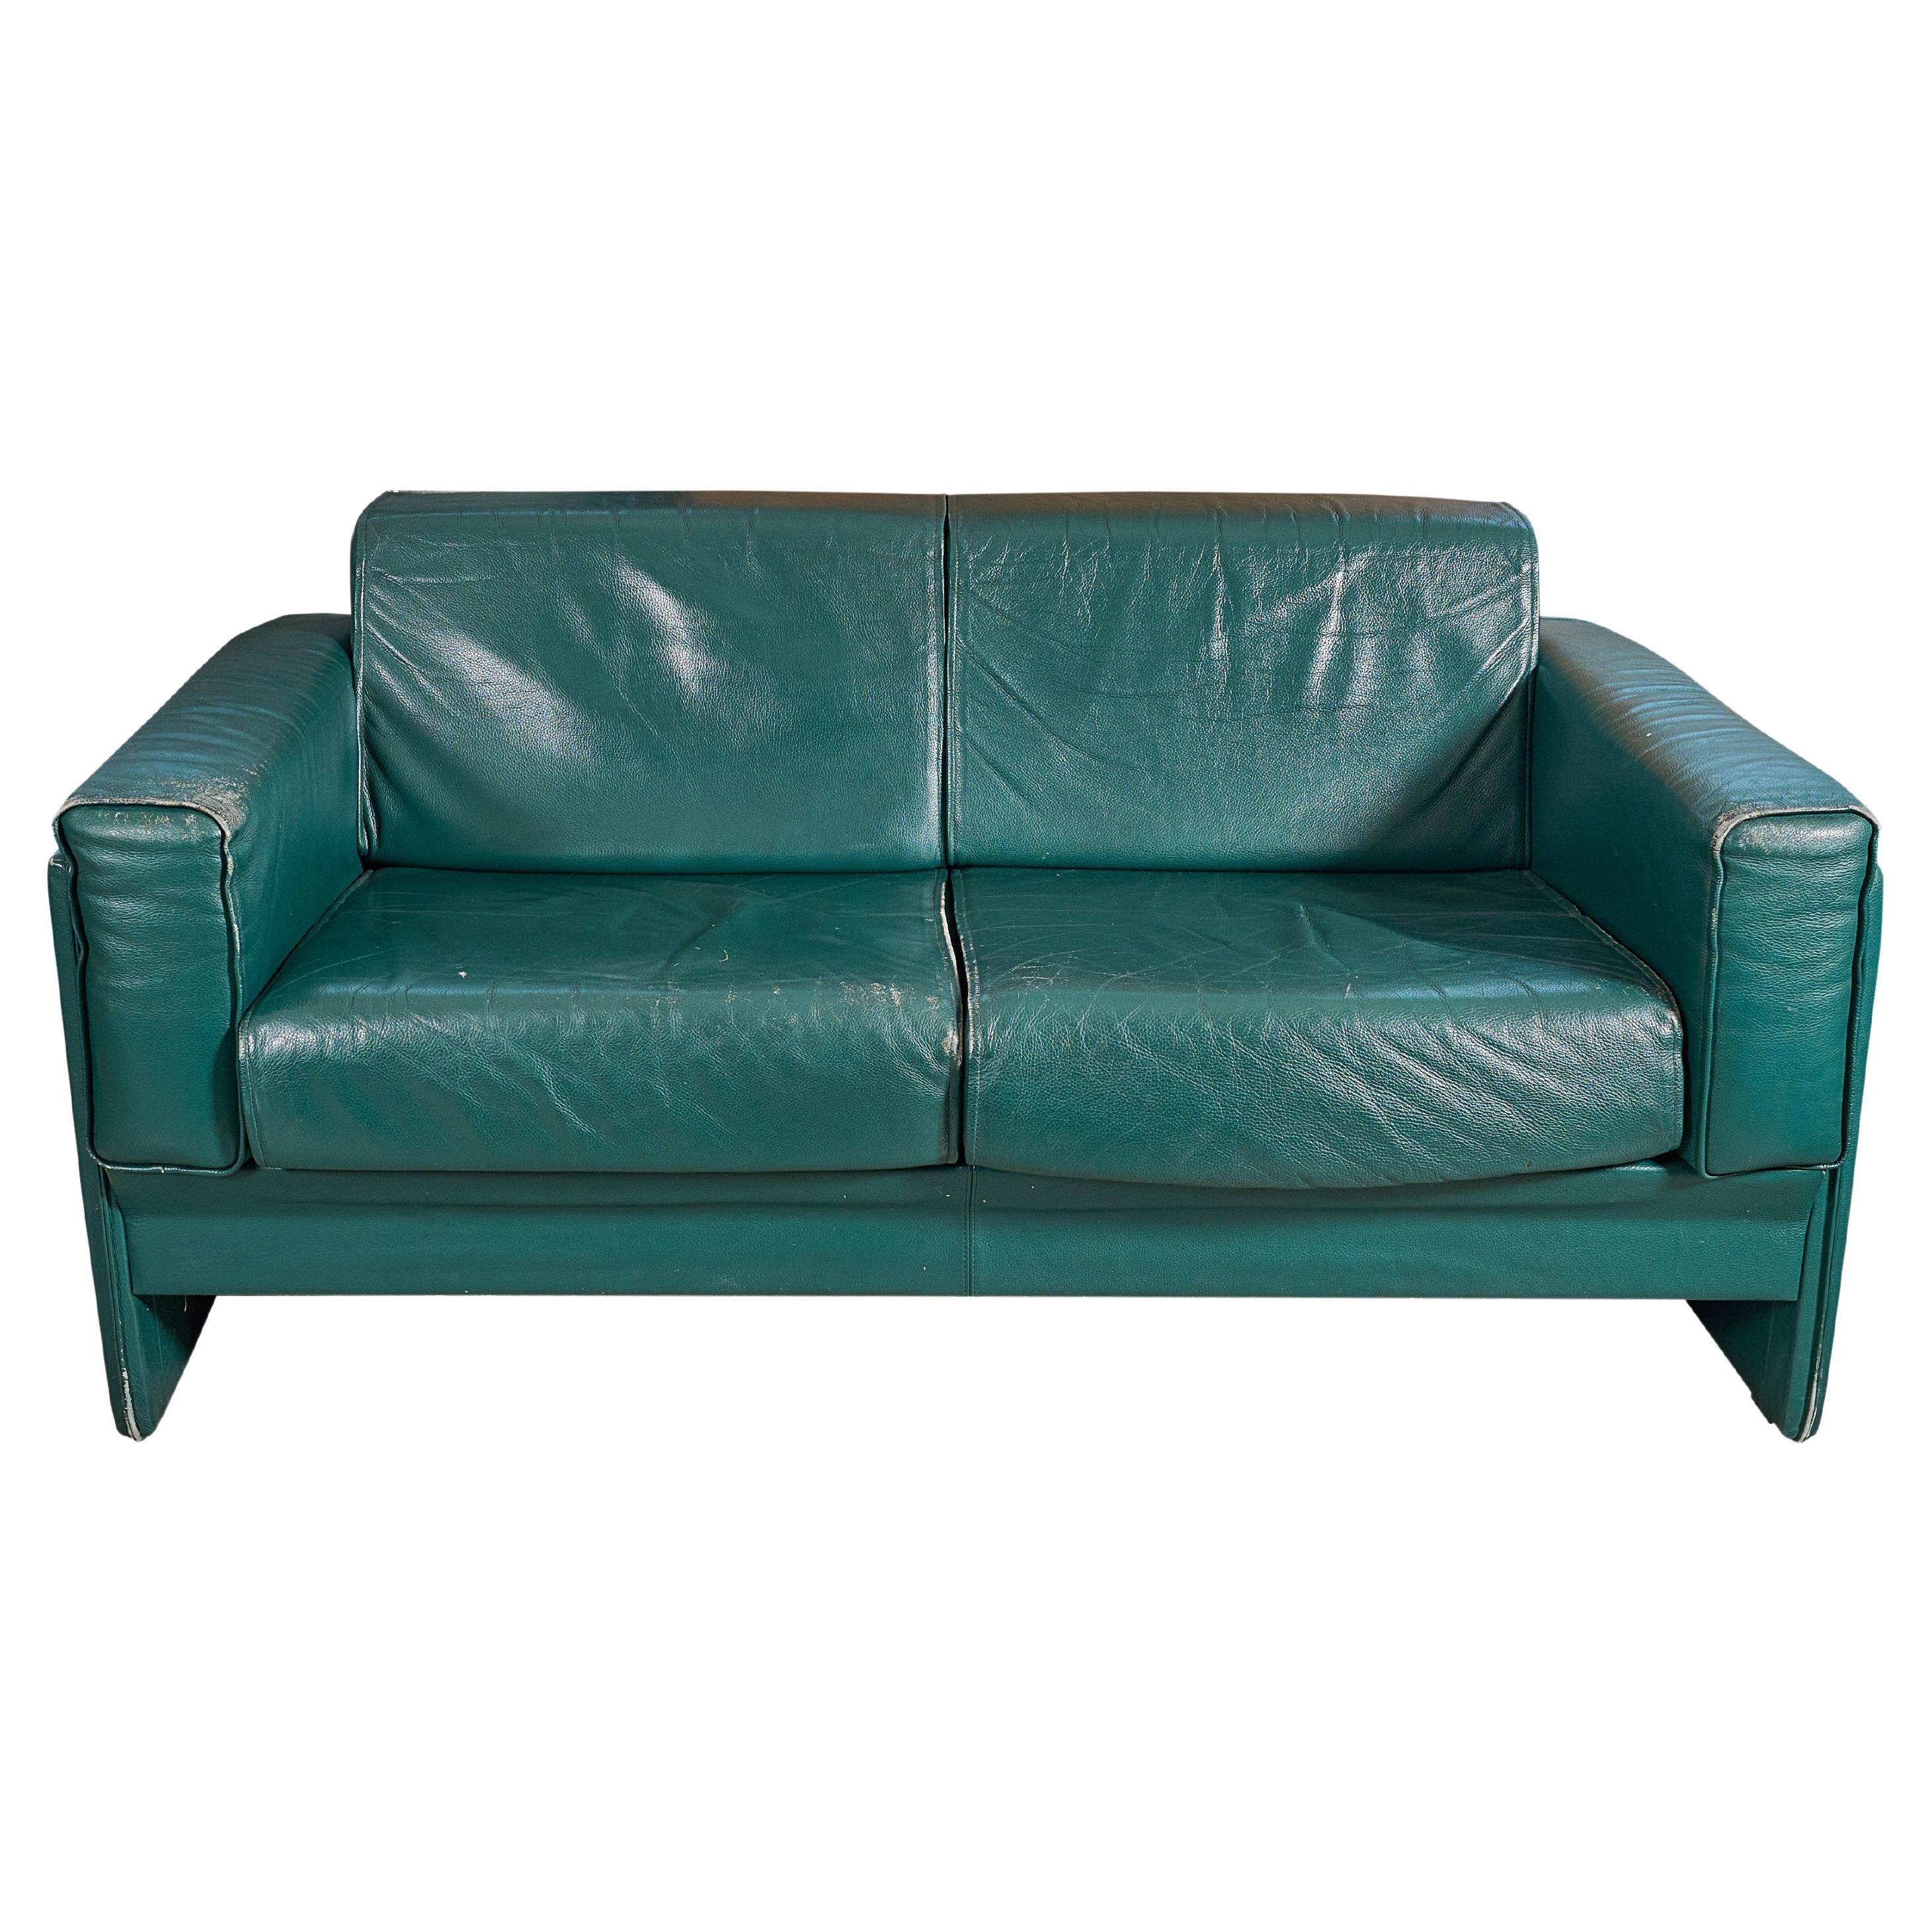 Midcentury Leather Two Seat Sofa